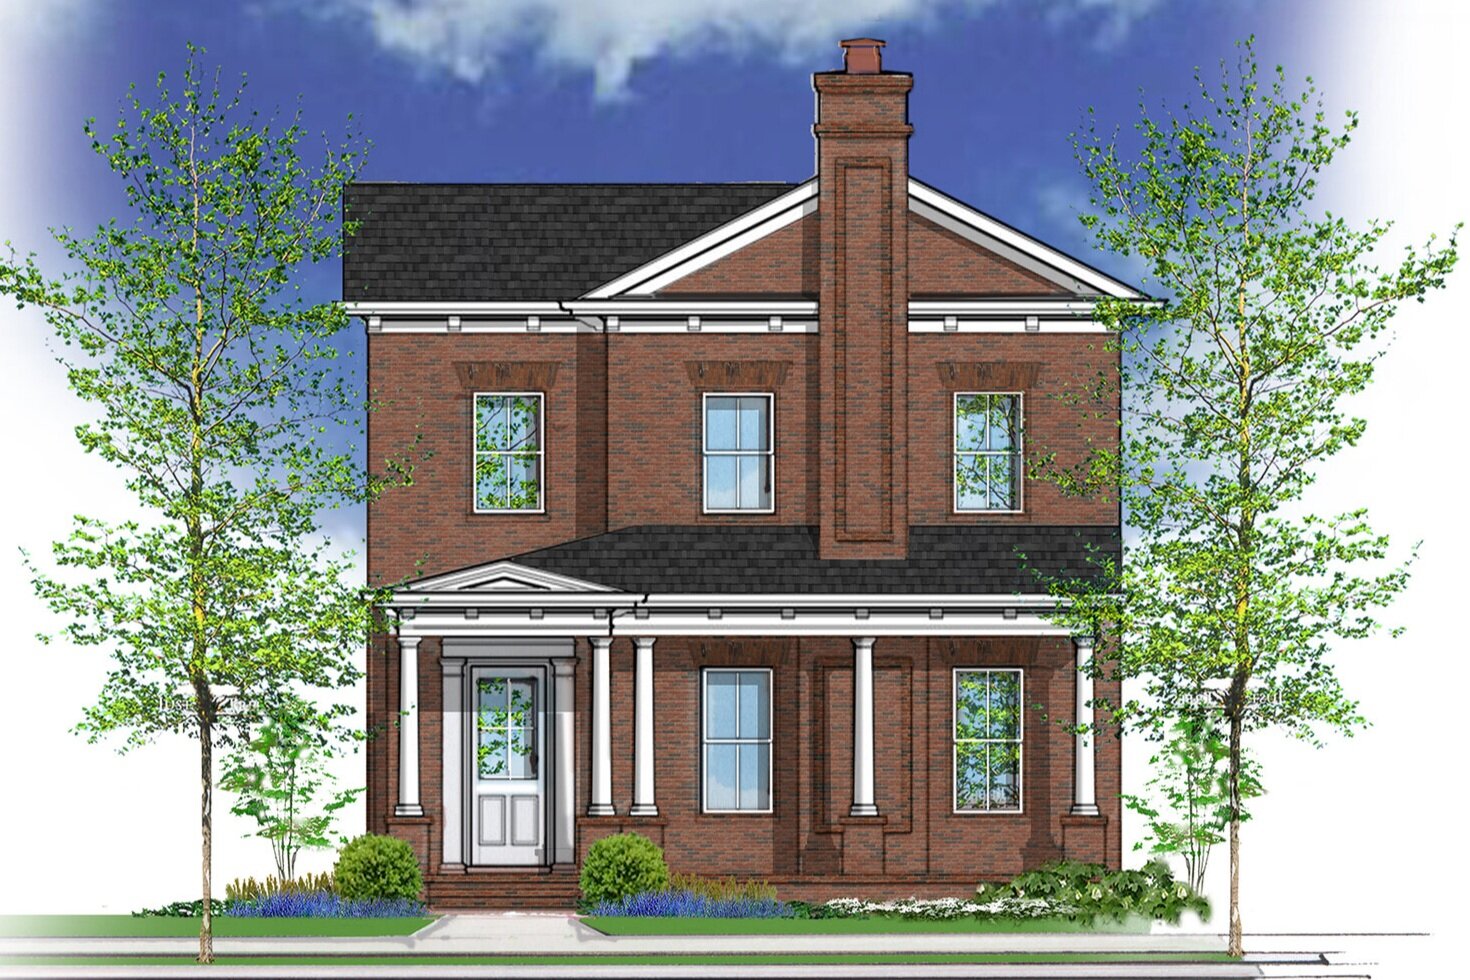 drawing of brick house